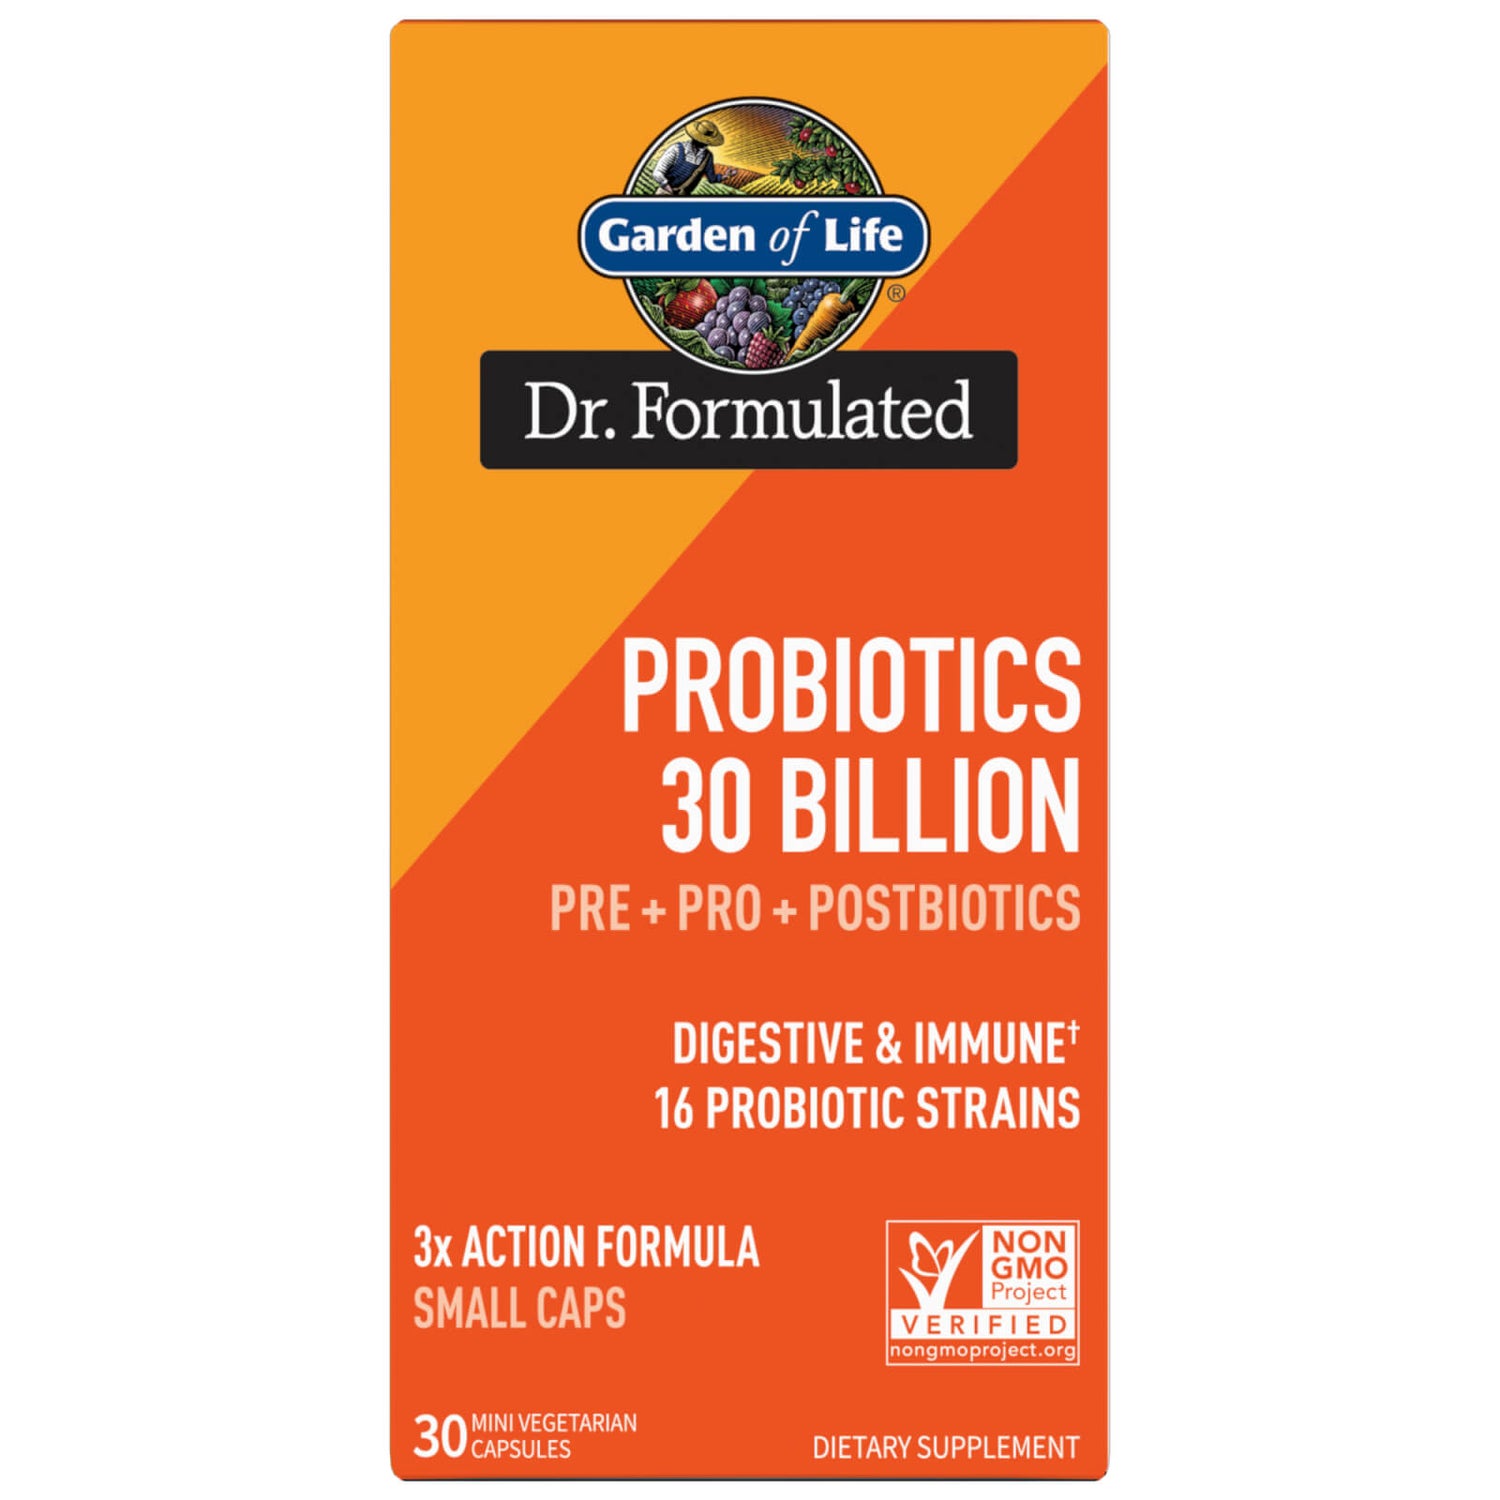 Dr. Formulated Microbiome 30B Pre+Pro+Postbiotics